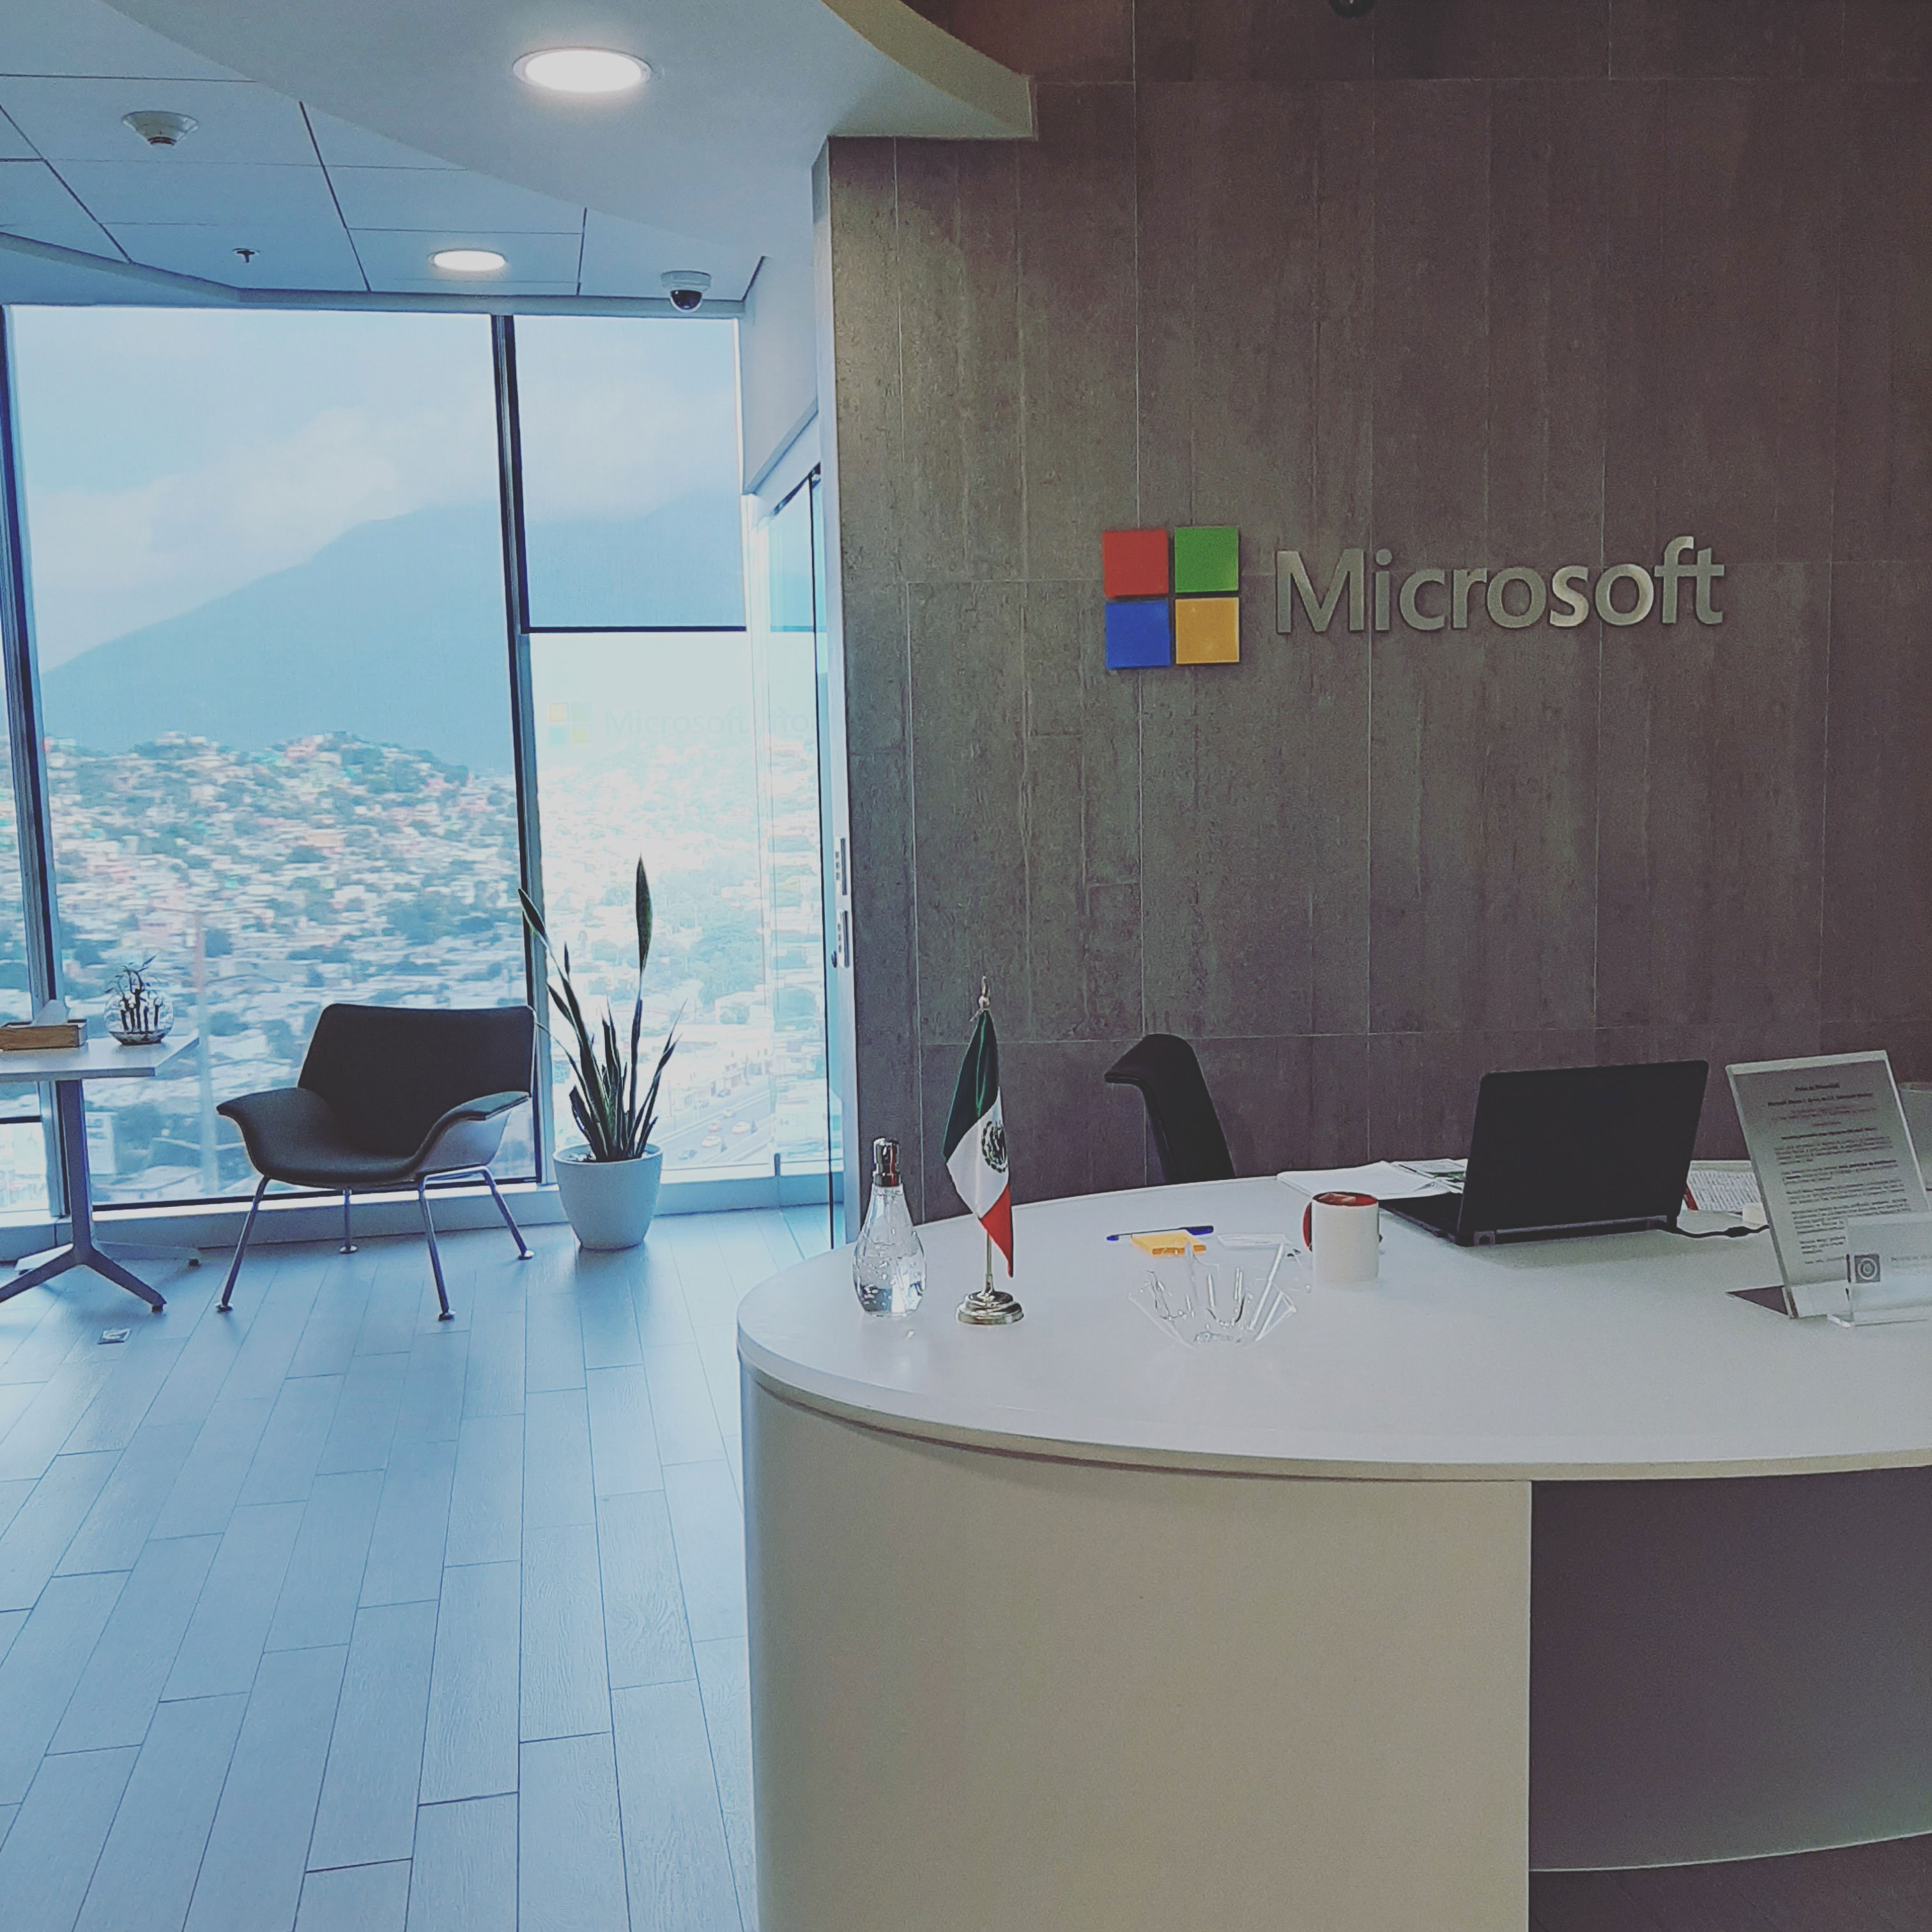 Microsoft reception desk signage in Charlotte, NC